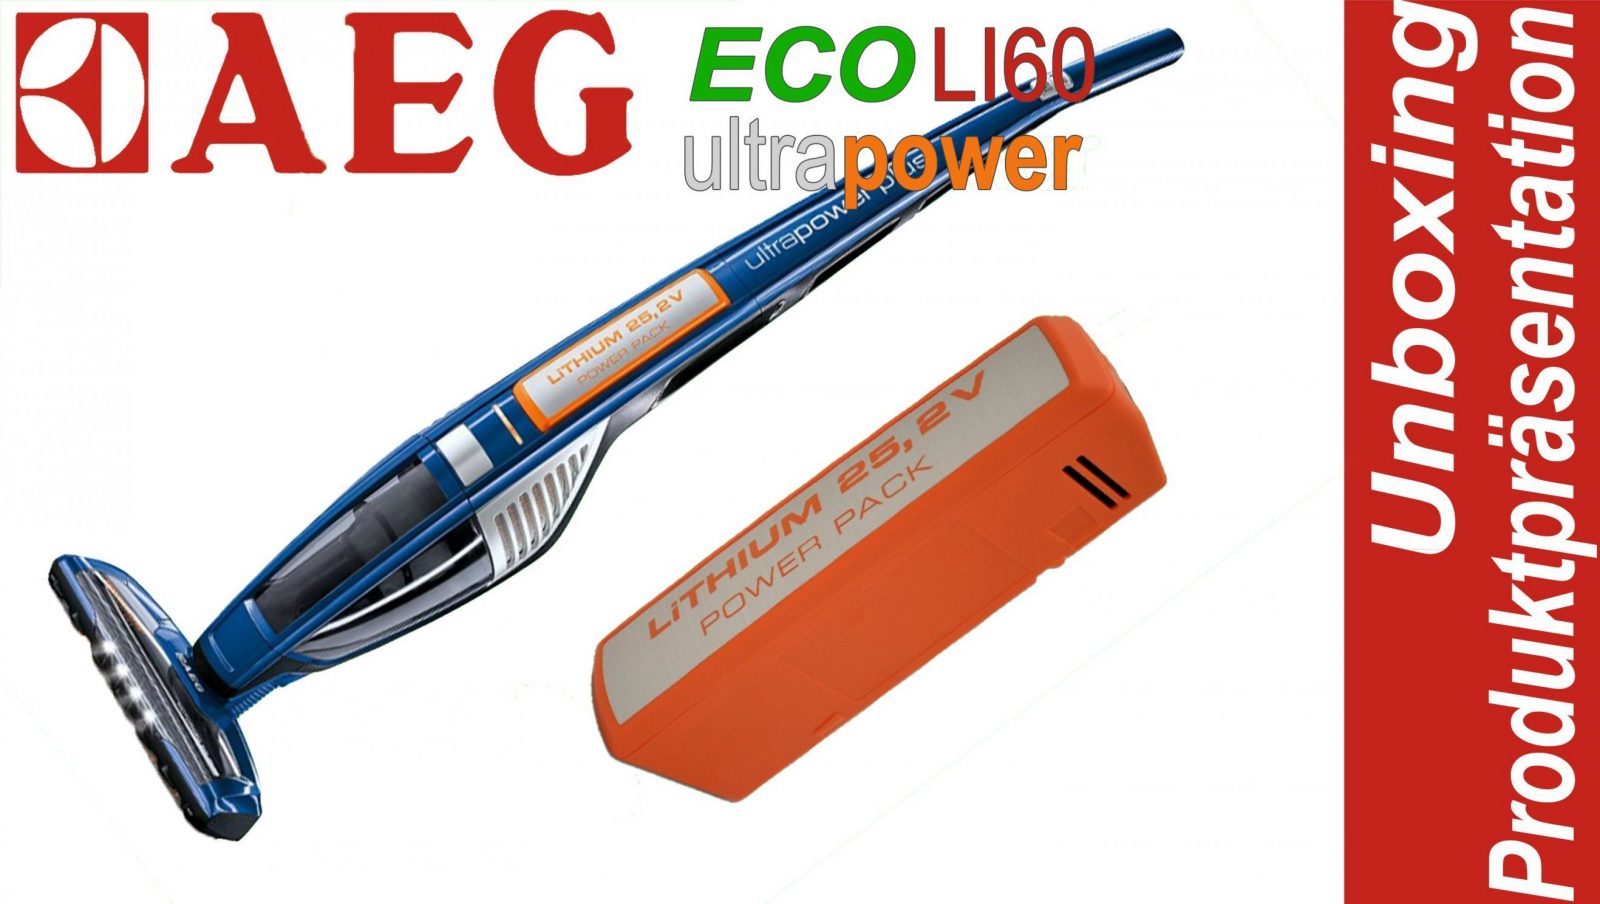 Aeg Eco Li60 Ultra Power Akkustaubsauger  Unboxing Und von Aeg Eco Li 60 Ultrapower Ag 5012 Test Photo